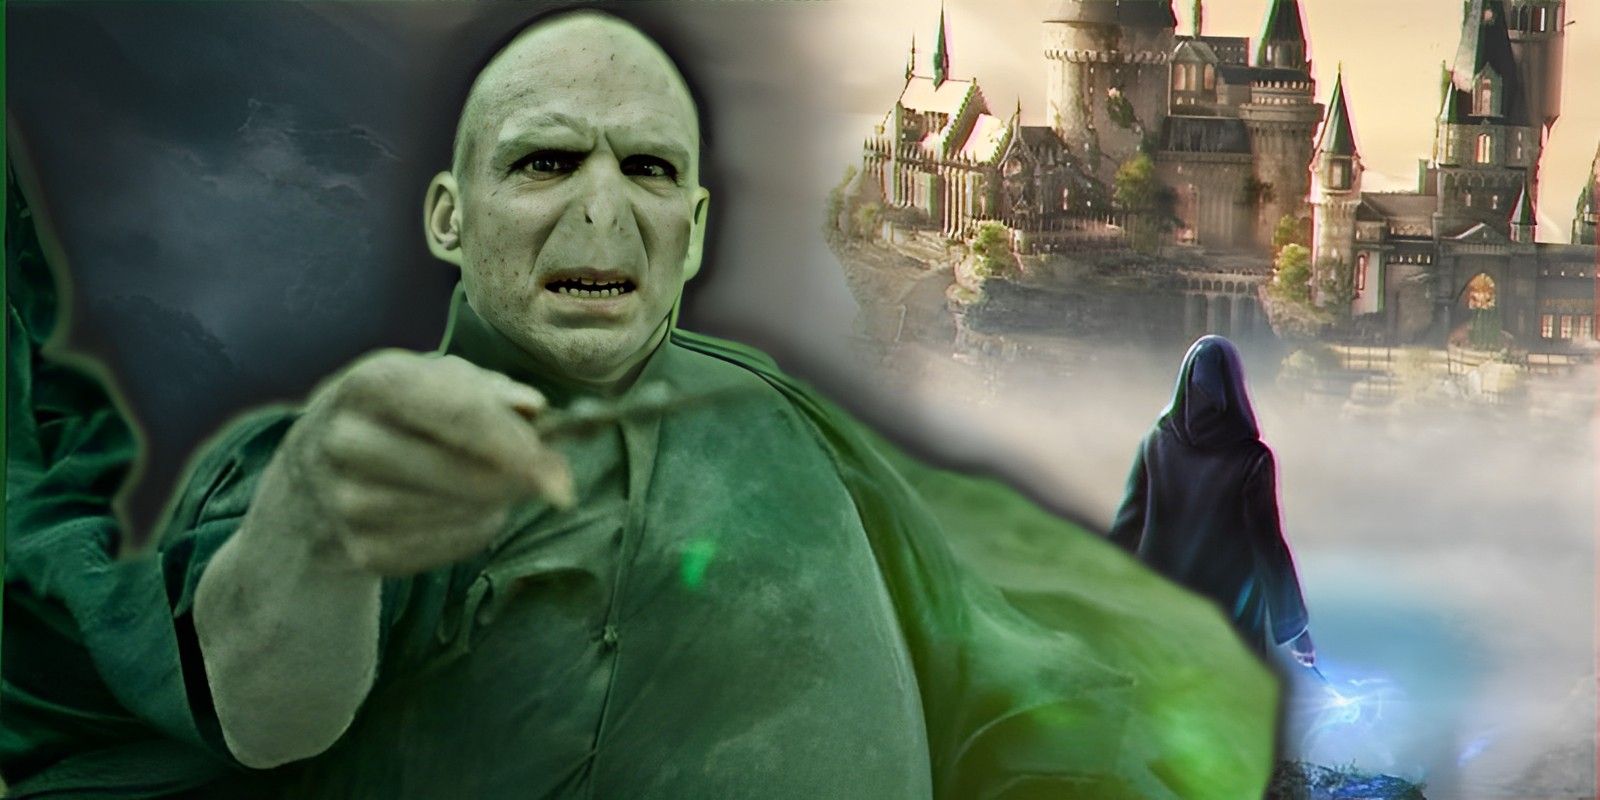 Voldemort casting Avada Kedavra over an image of Hogwarts Legacy